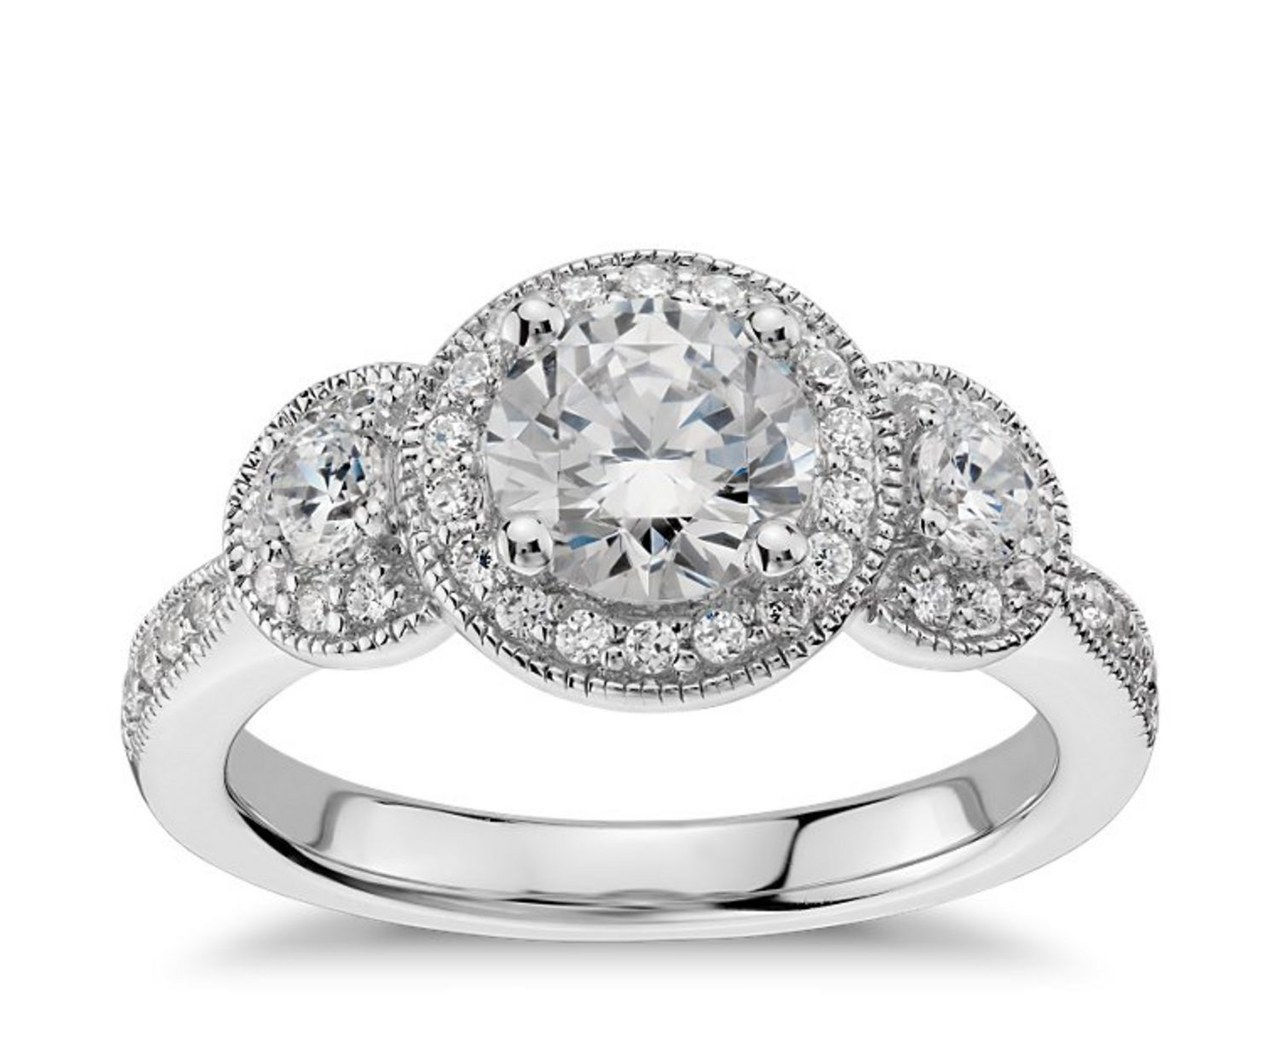 5 perrie edwards engagement ring zayn malik one direction celebrity weddings